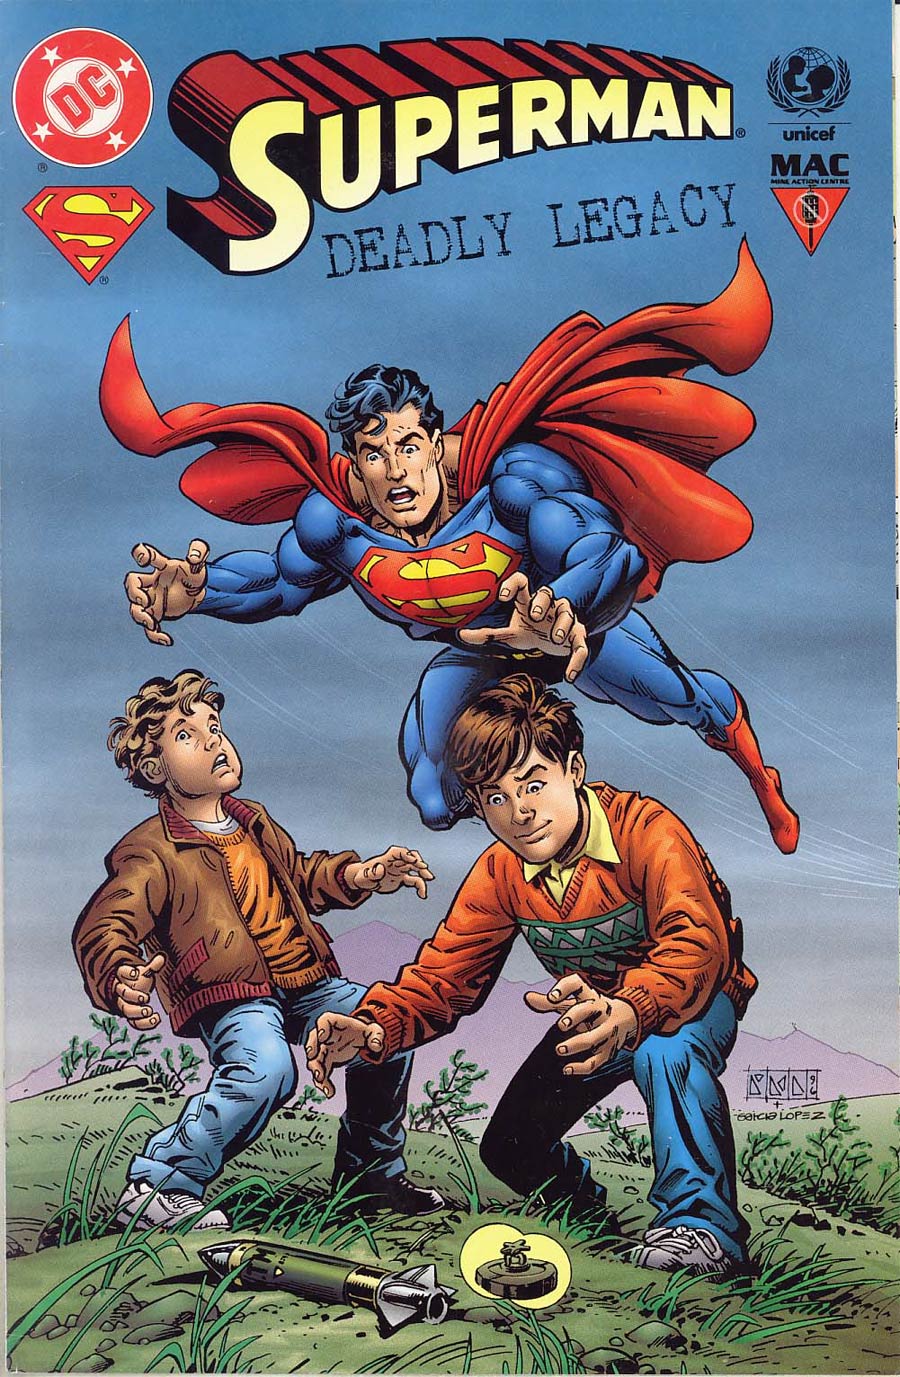 Superman Deadly Legacy UNICEF